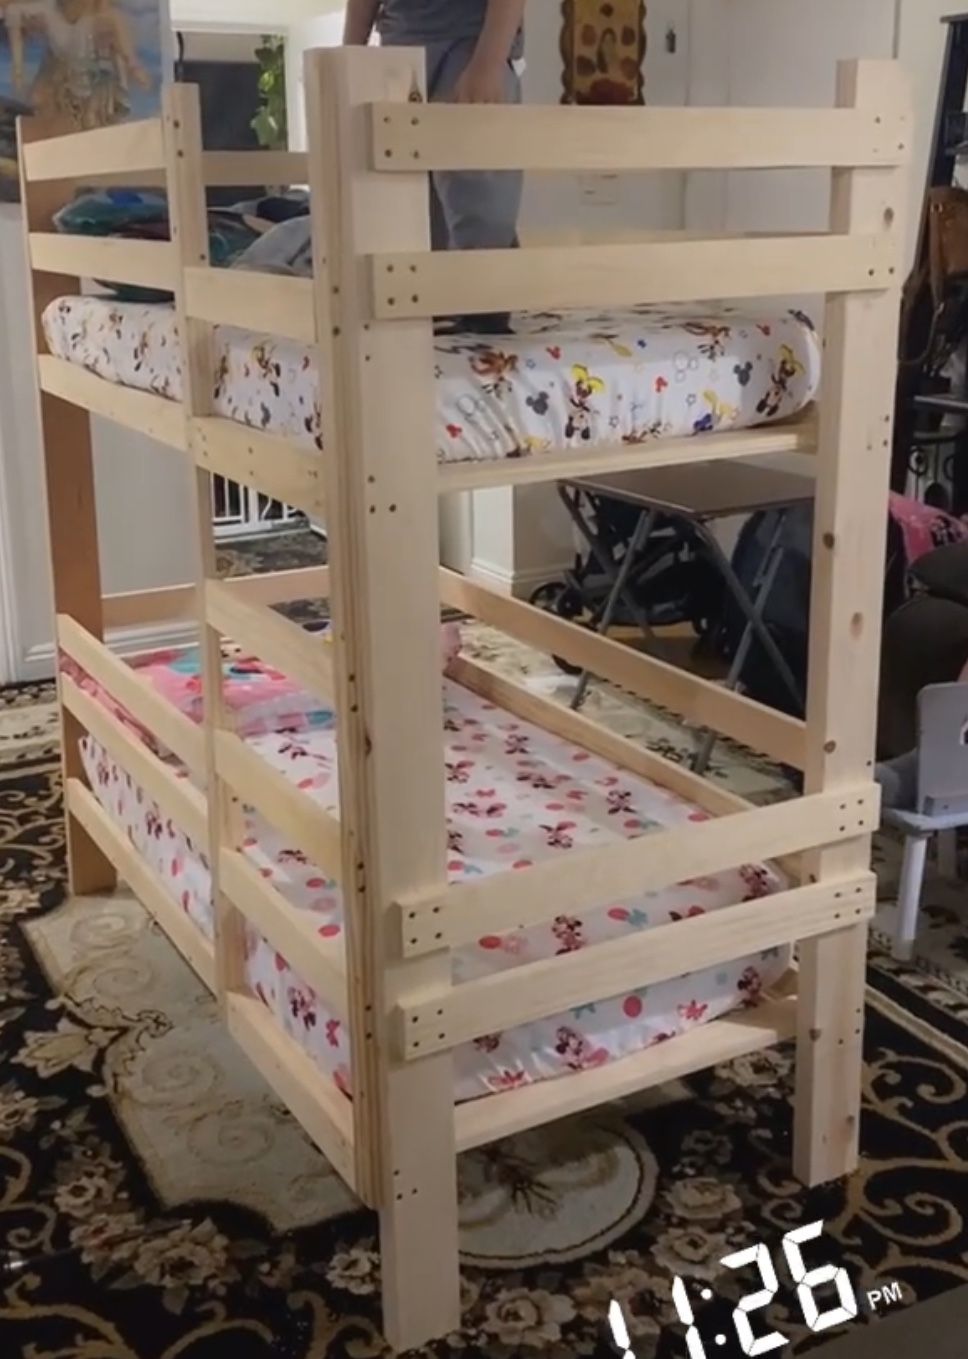 Crib Size Bunk Bed 